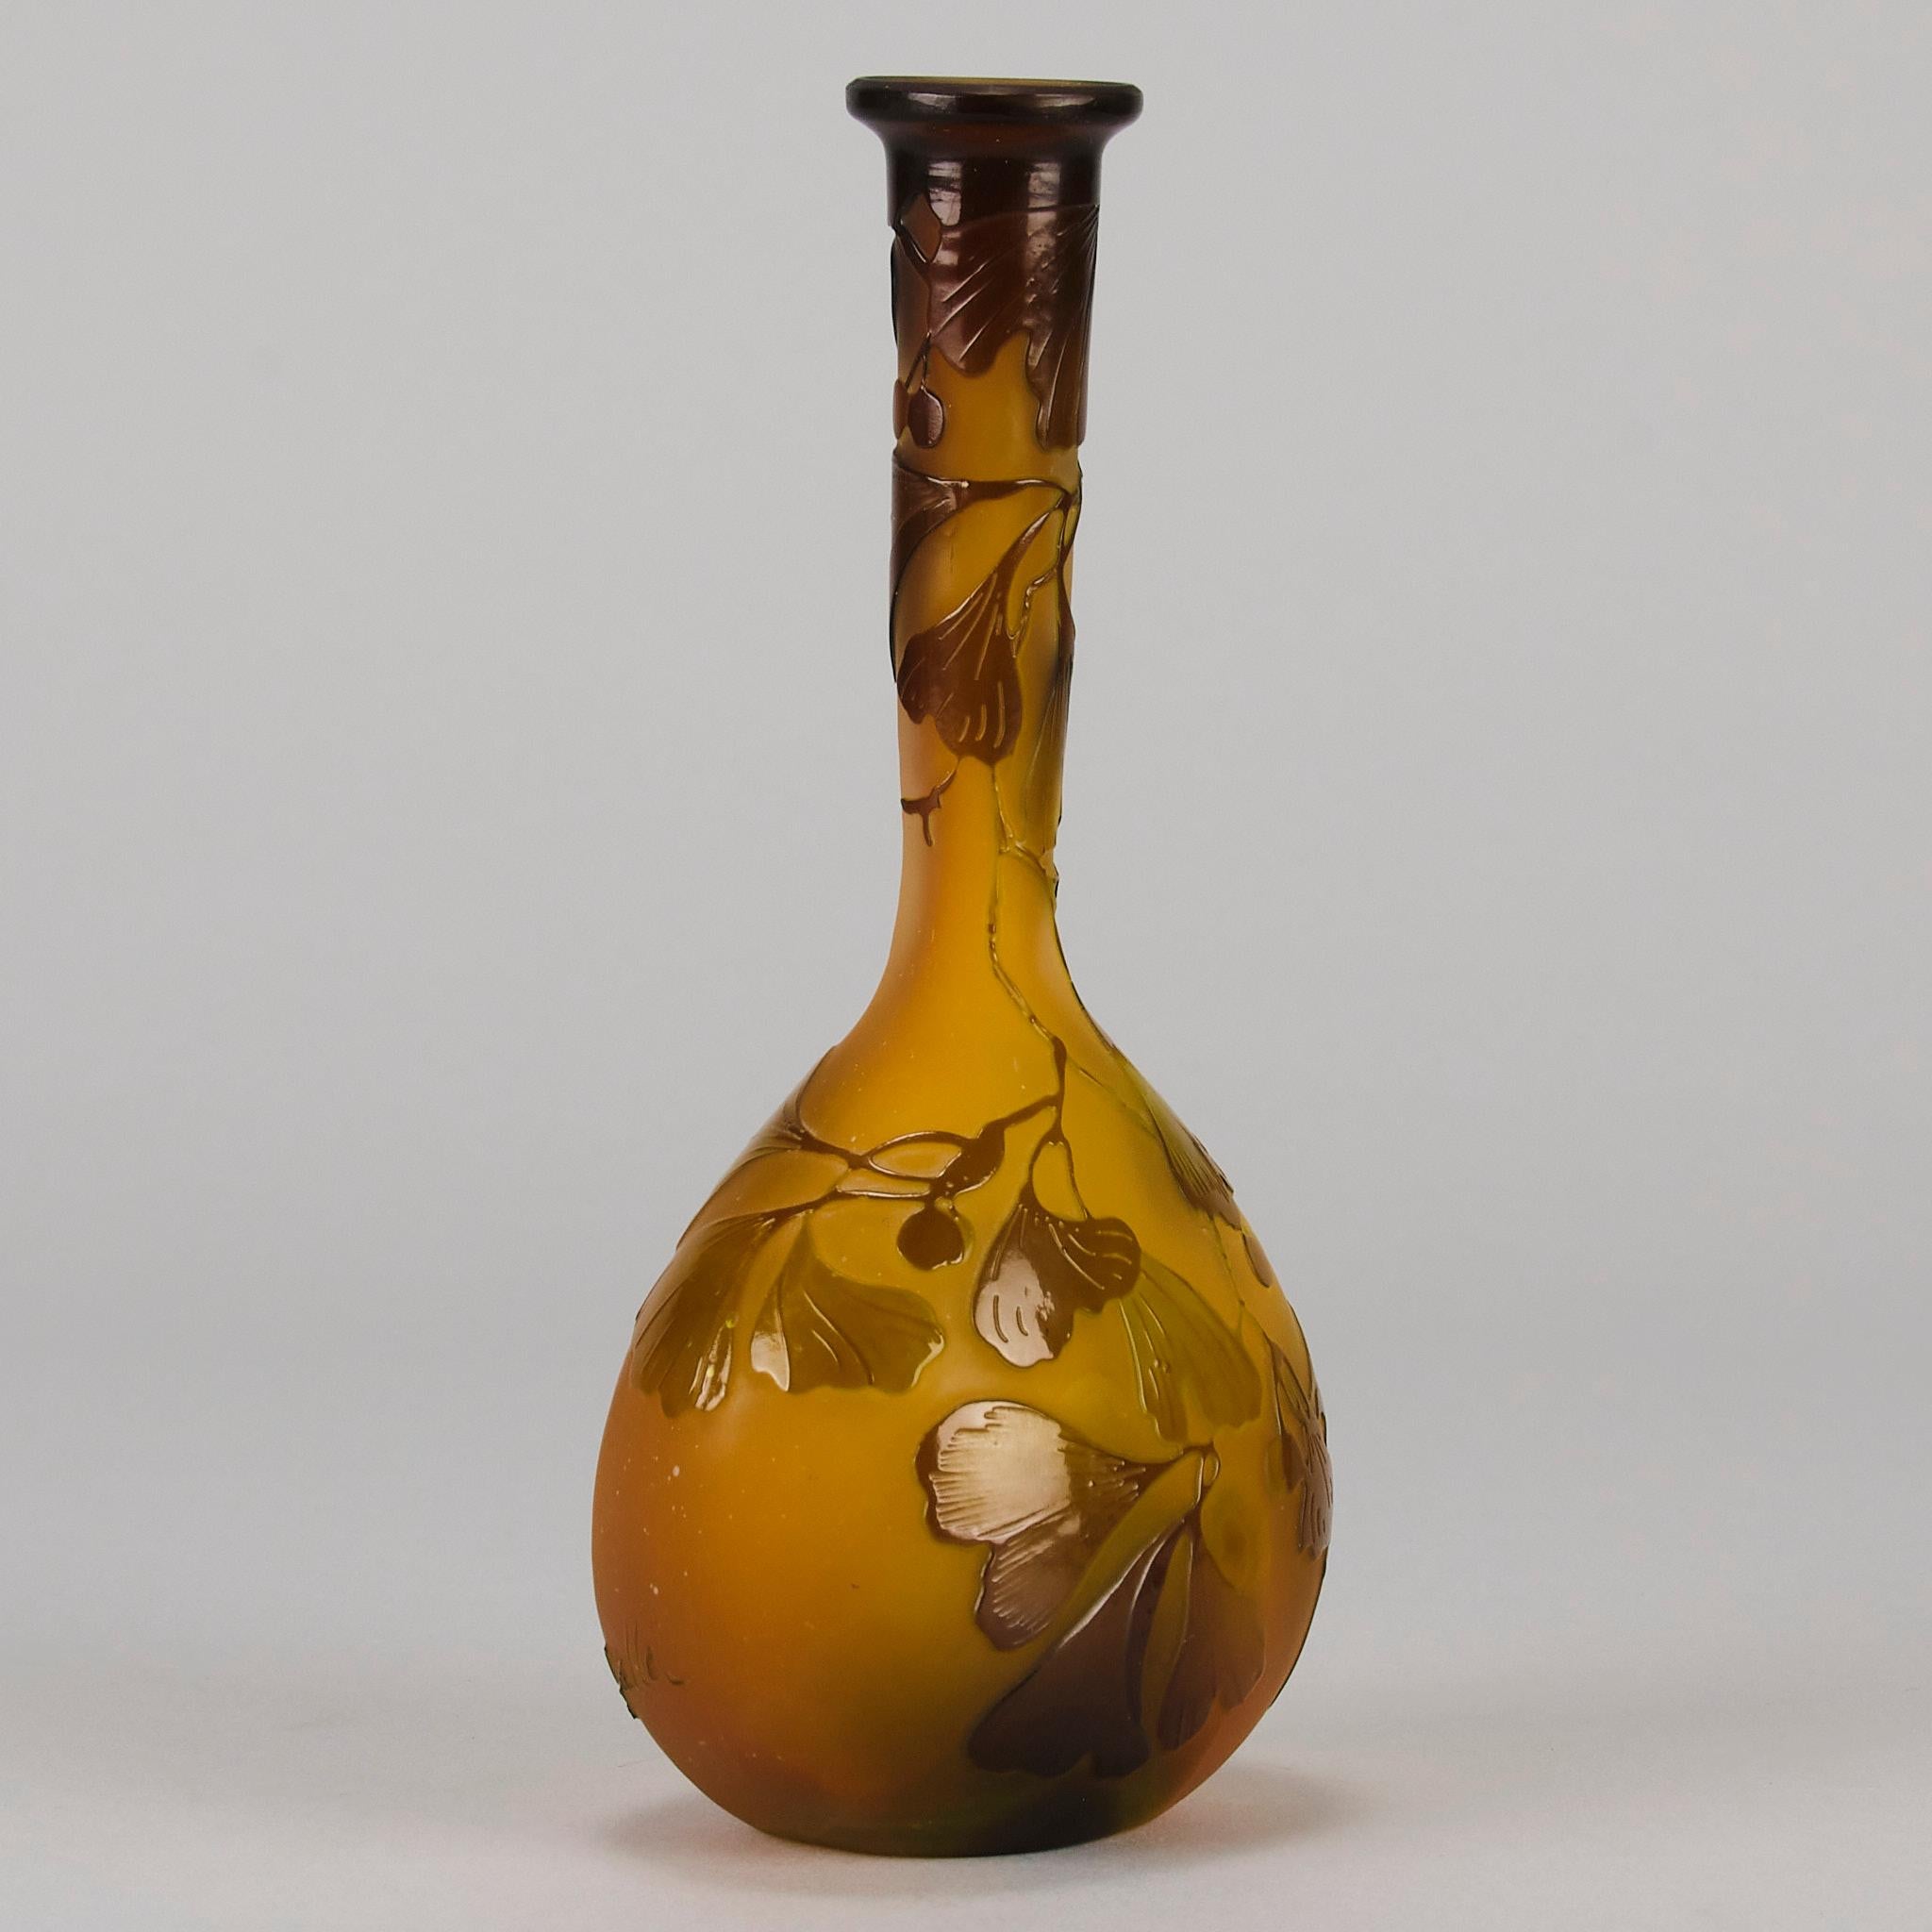 Molded Early 20th Century Art Nouveau Vase entitled 